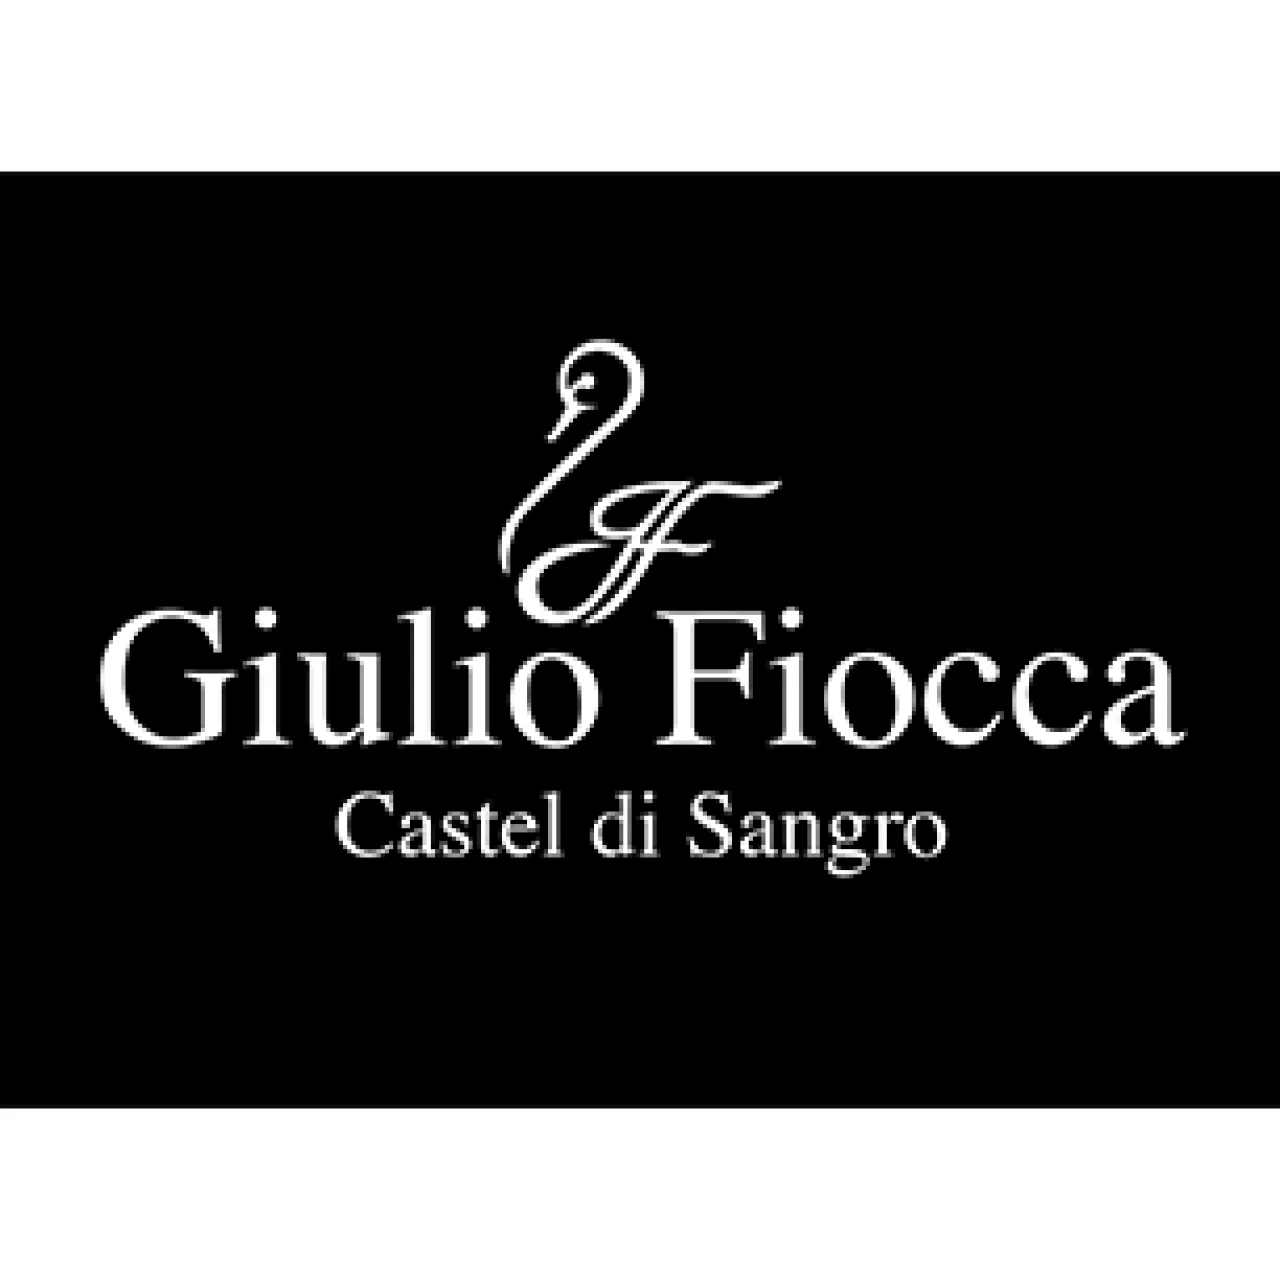 Banner Tabaccheria Fiocca Castel Di Sangro 306 per 306 pixel